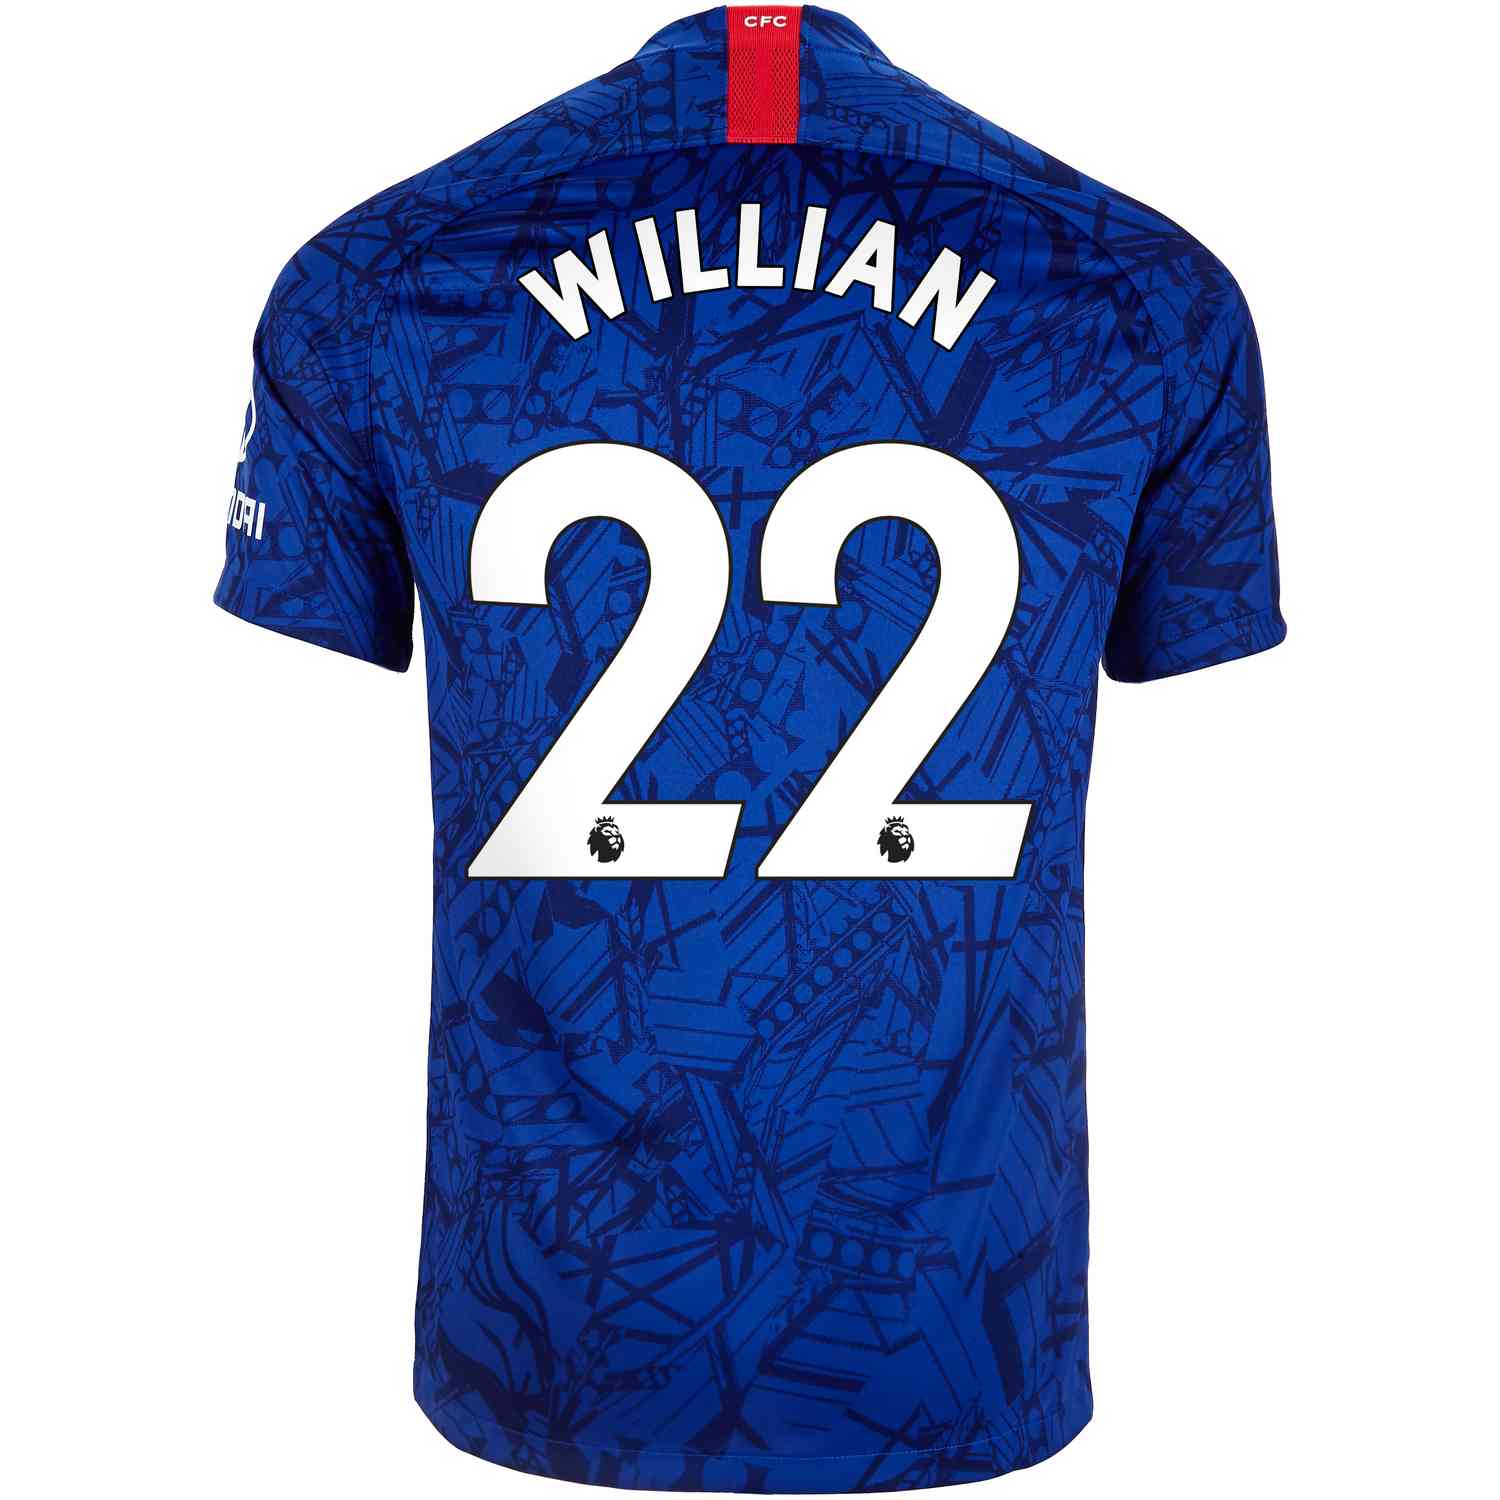 2019/20 Nike Willian Chelsea Home 